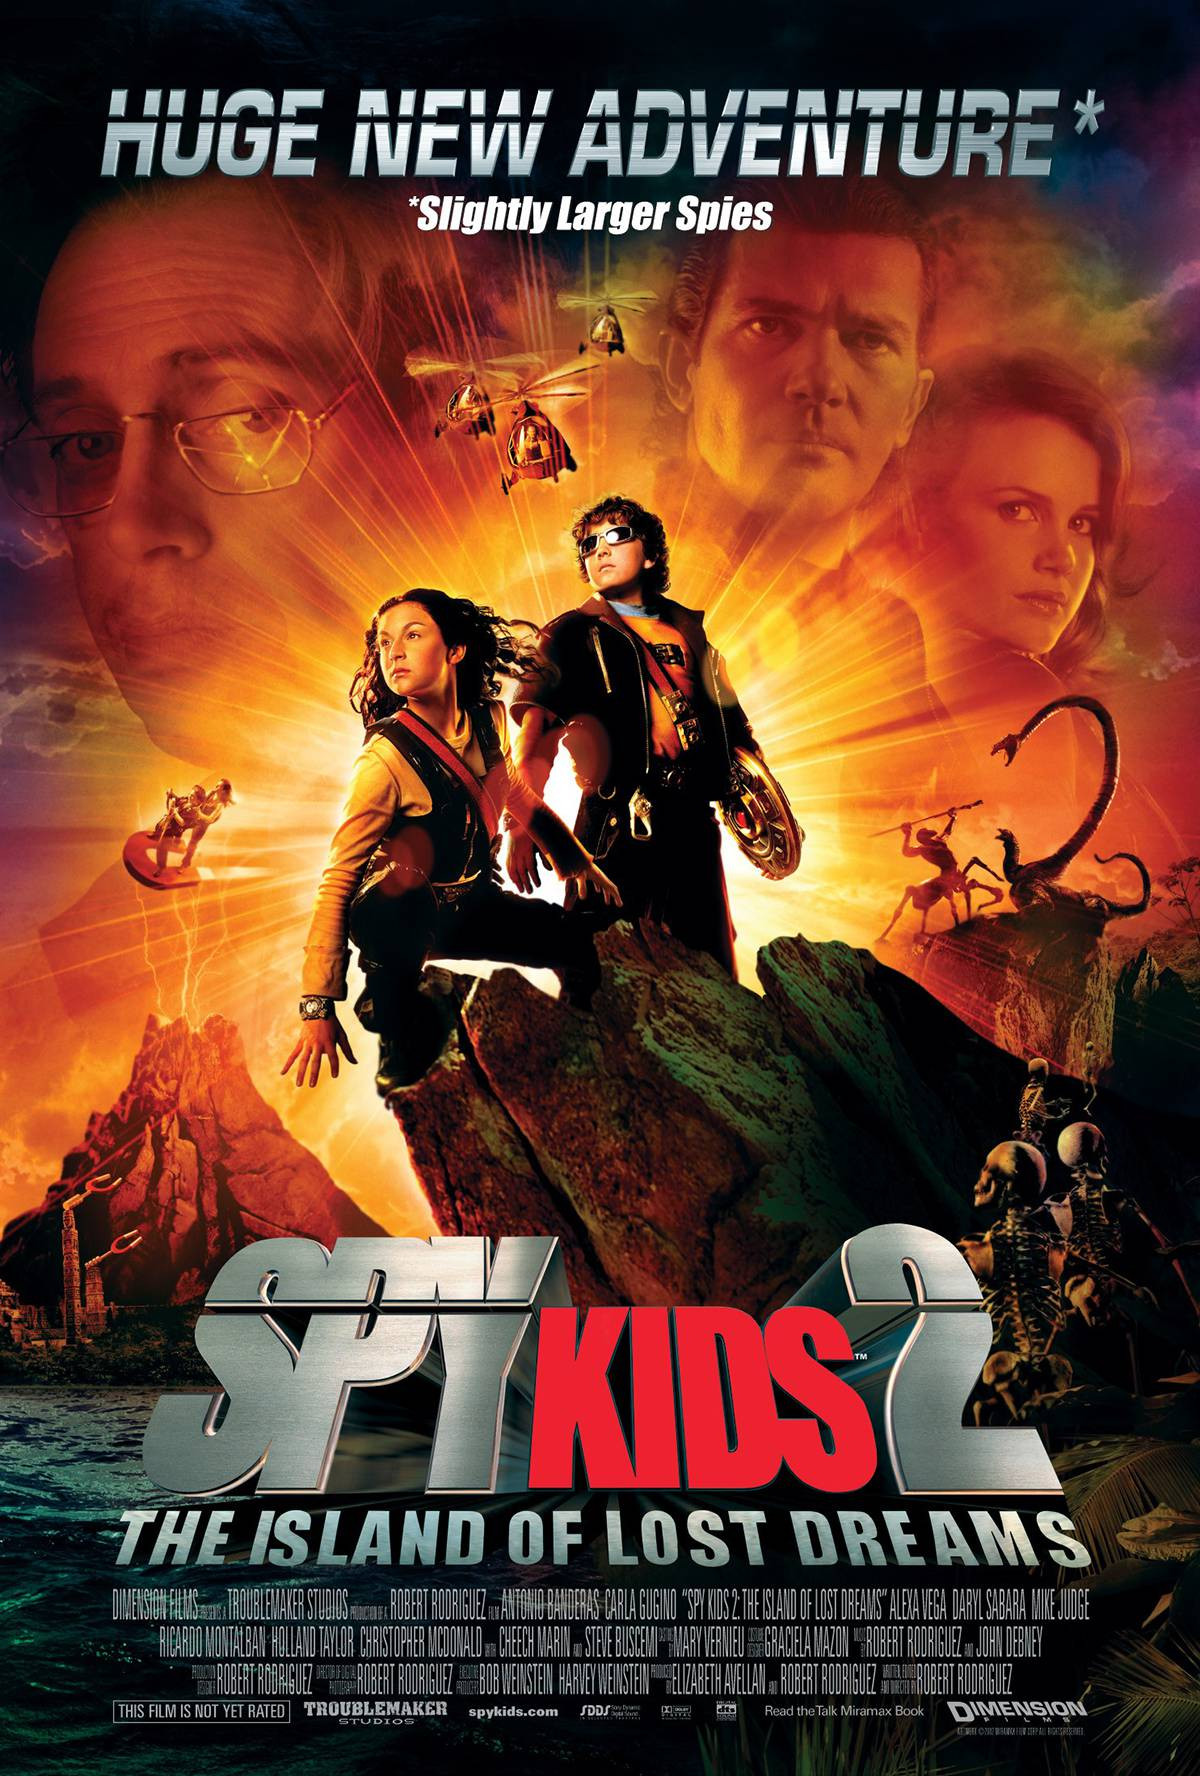 Spy Kids 2 Quote
 Spy Kids 2 The Island of Lost Dreams 2002 News Clips